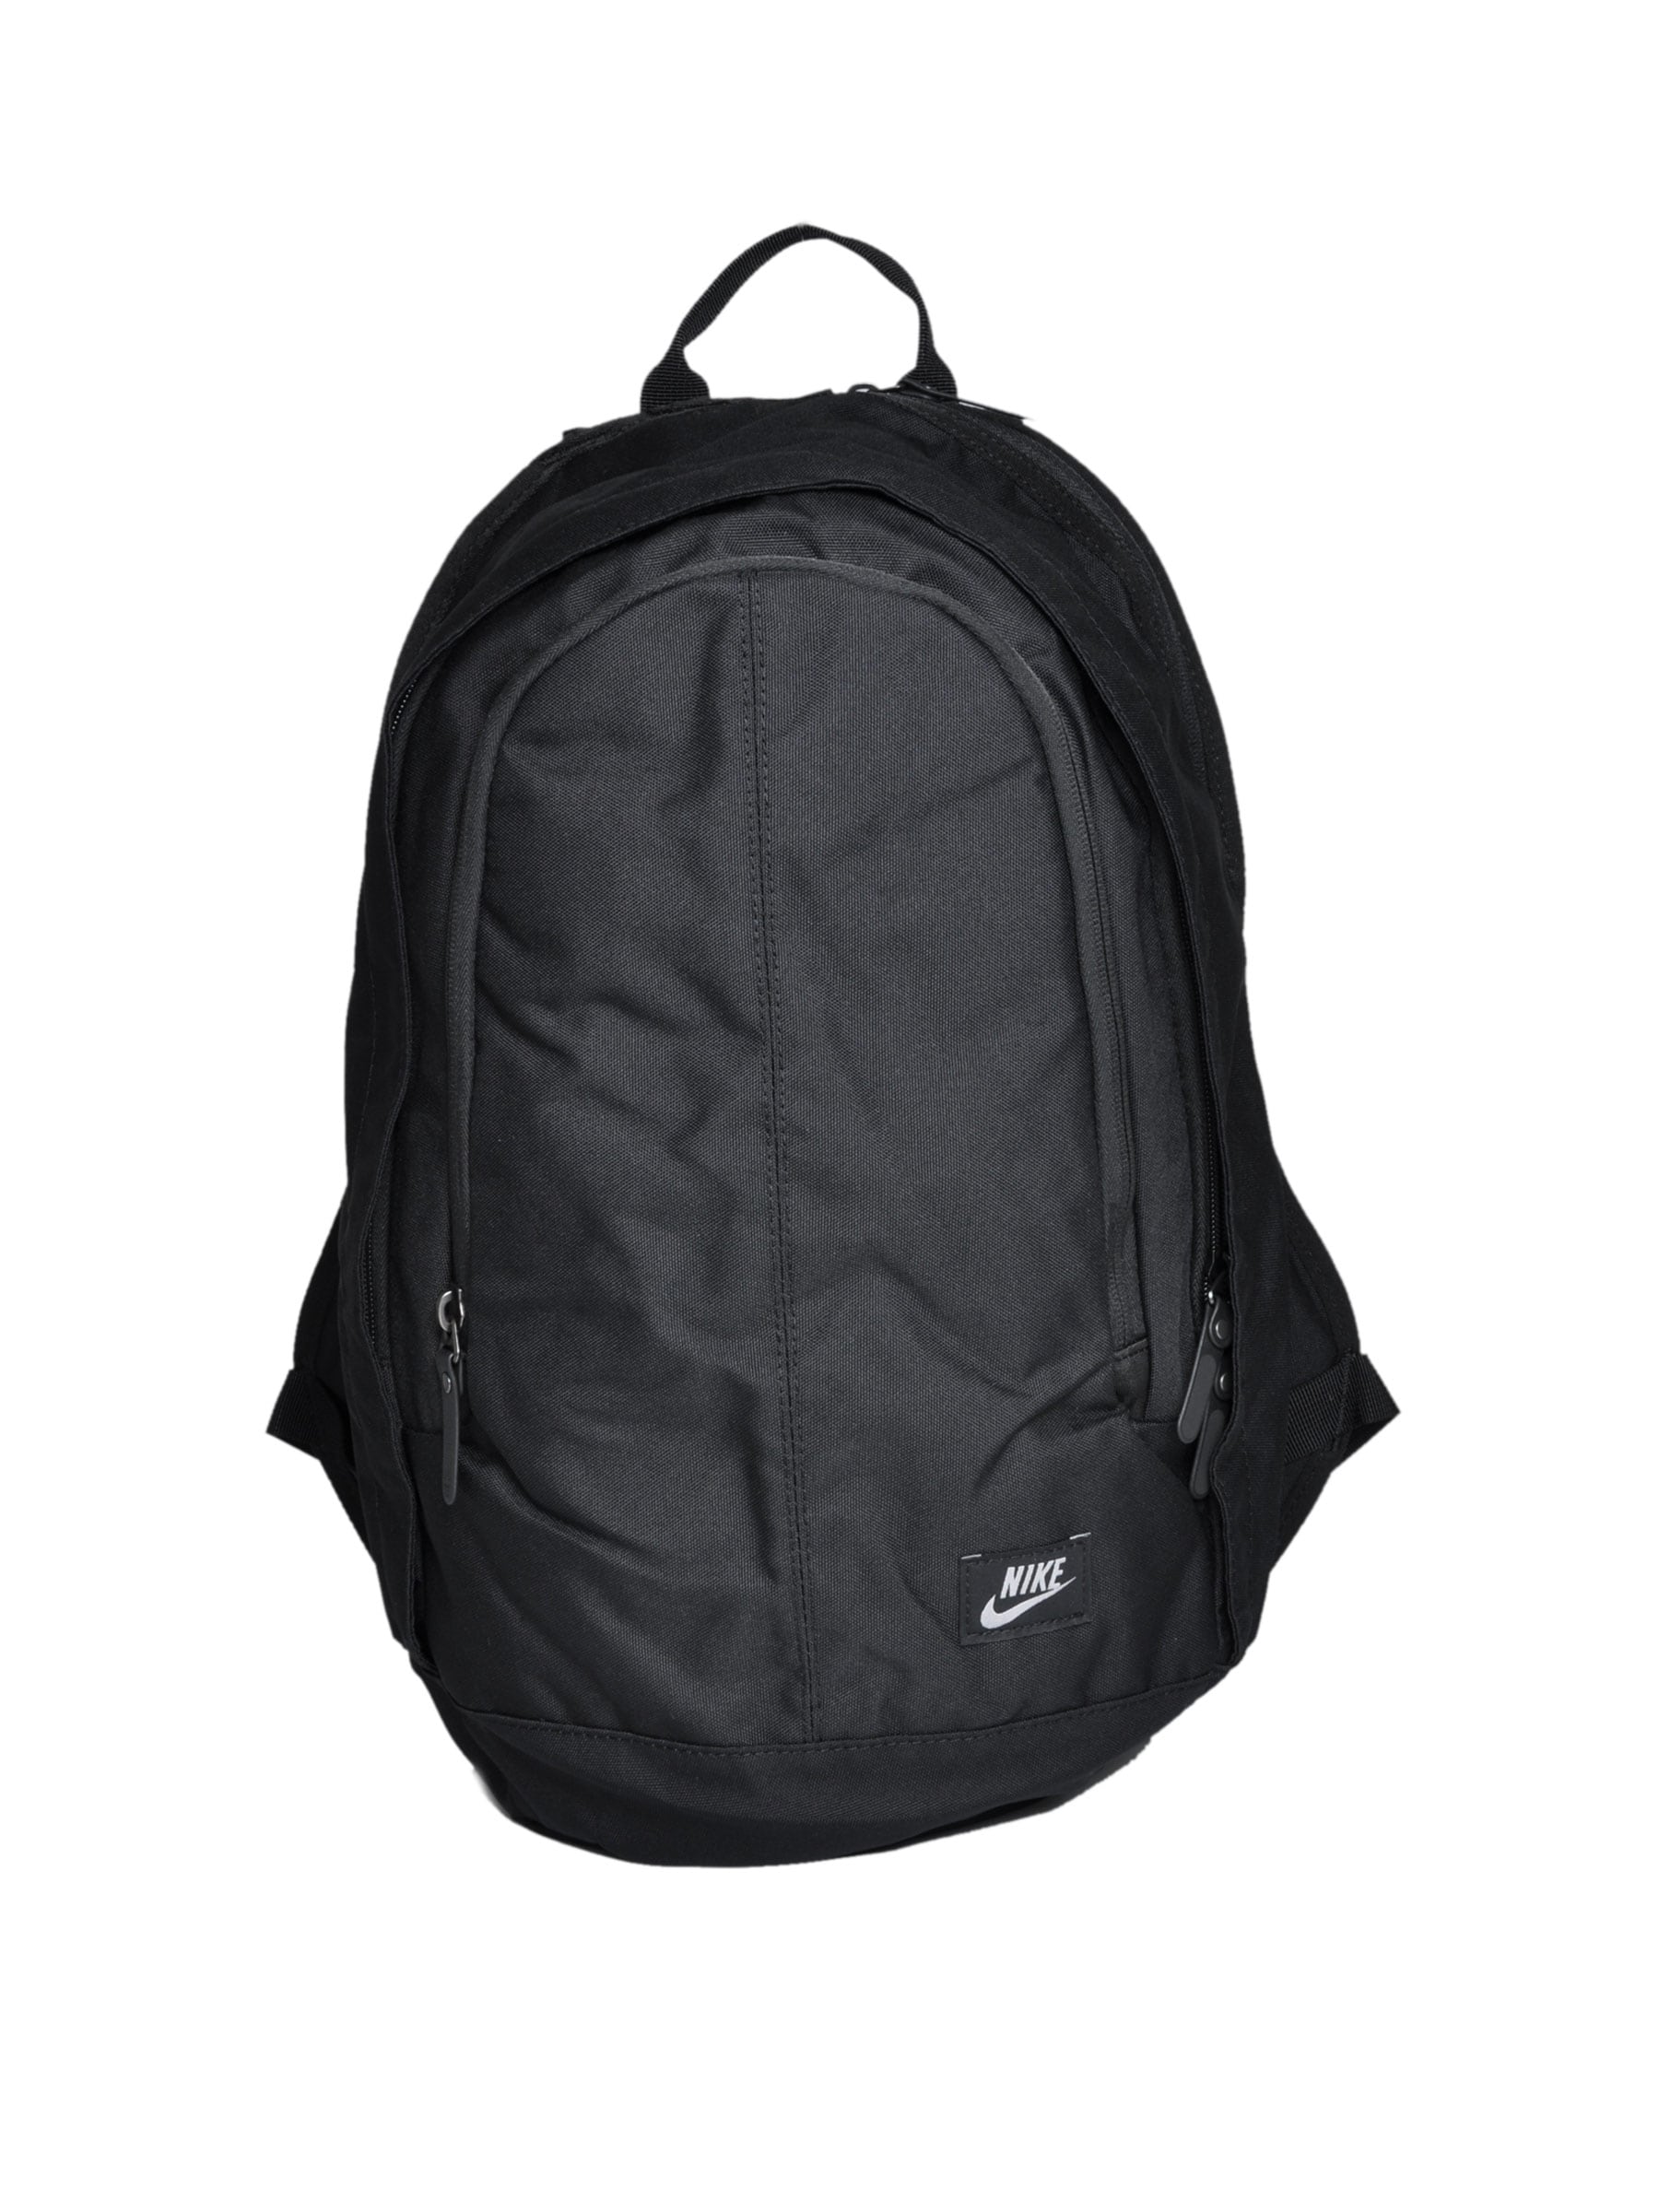 Nike Unisex Hayward 25m B Black Backpacks